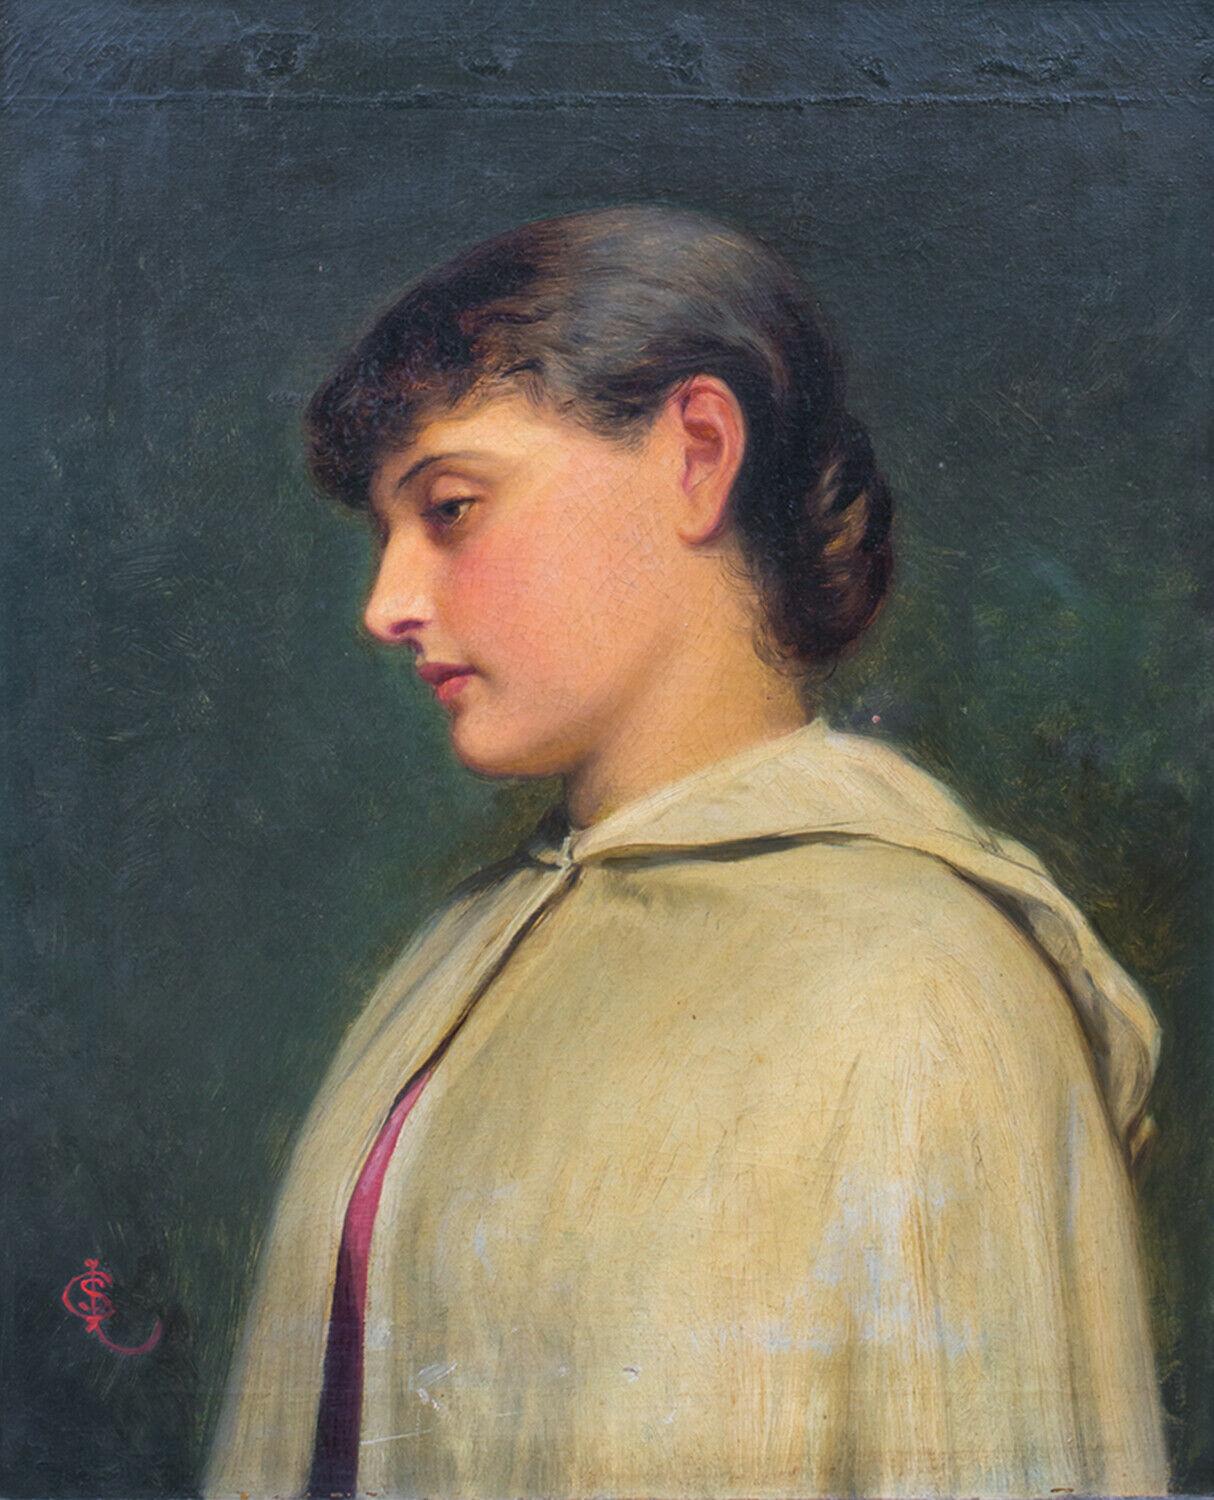 Portrait Of A Girl Wearing White Cloak, 19th Century